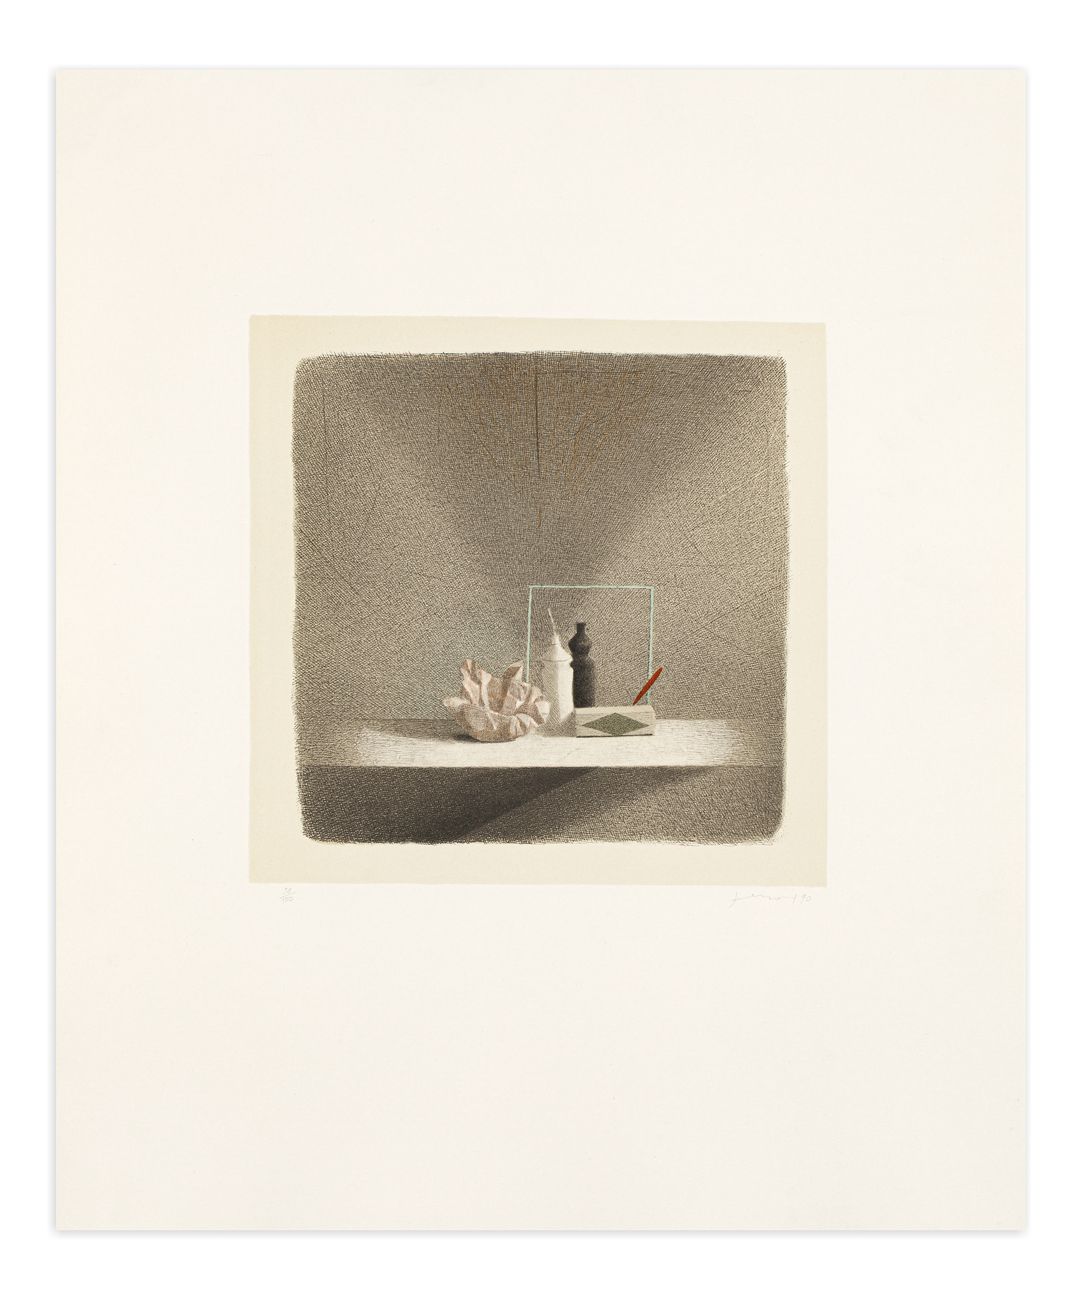 GIANFRANCO FERRONI (1927-2001) - Cono d'ombra, 1990 Lithographie sur fond

60x50&hellip;